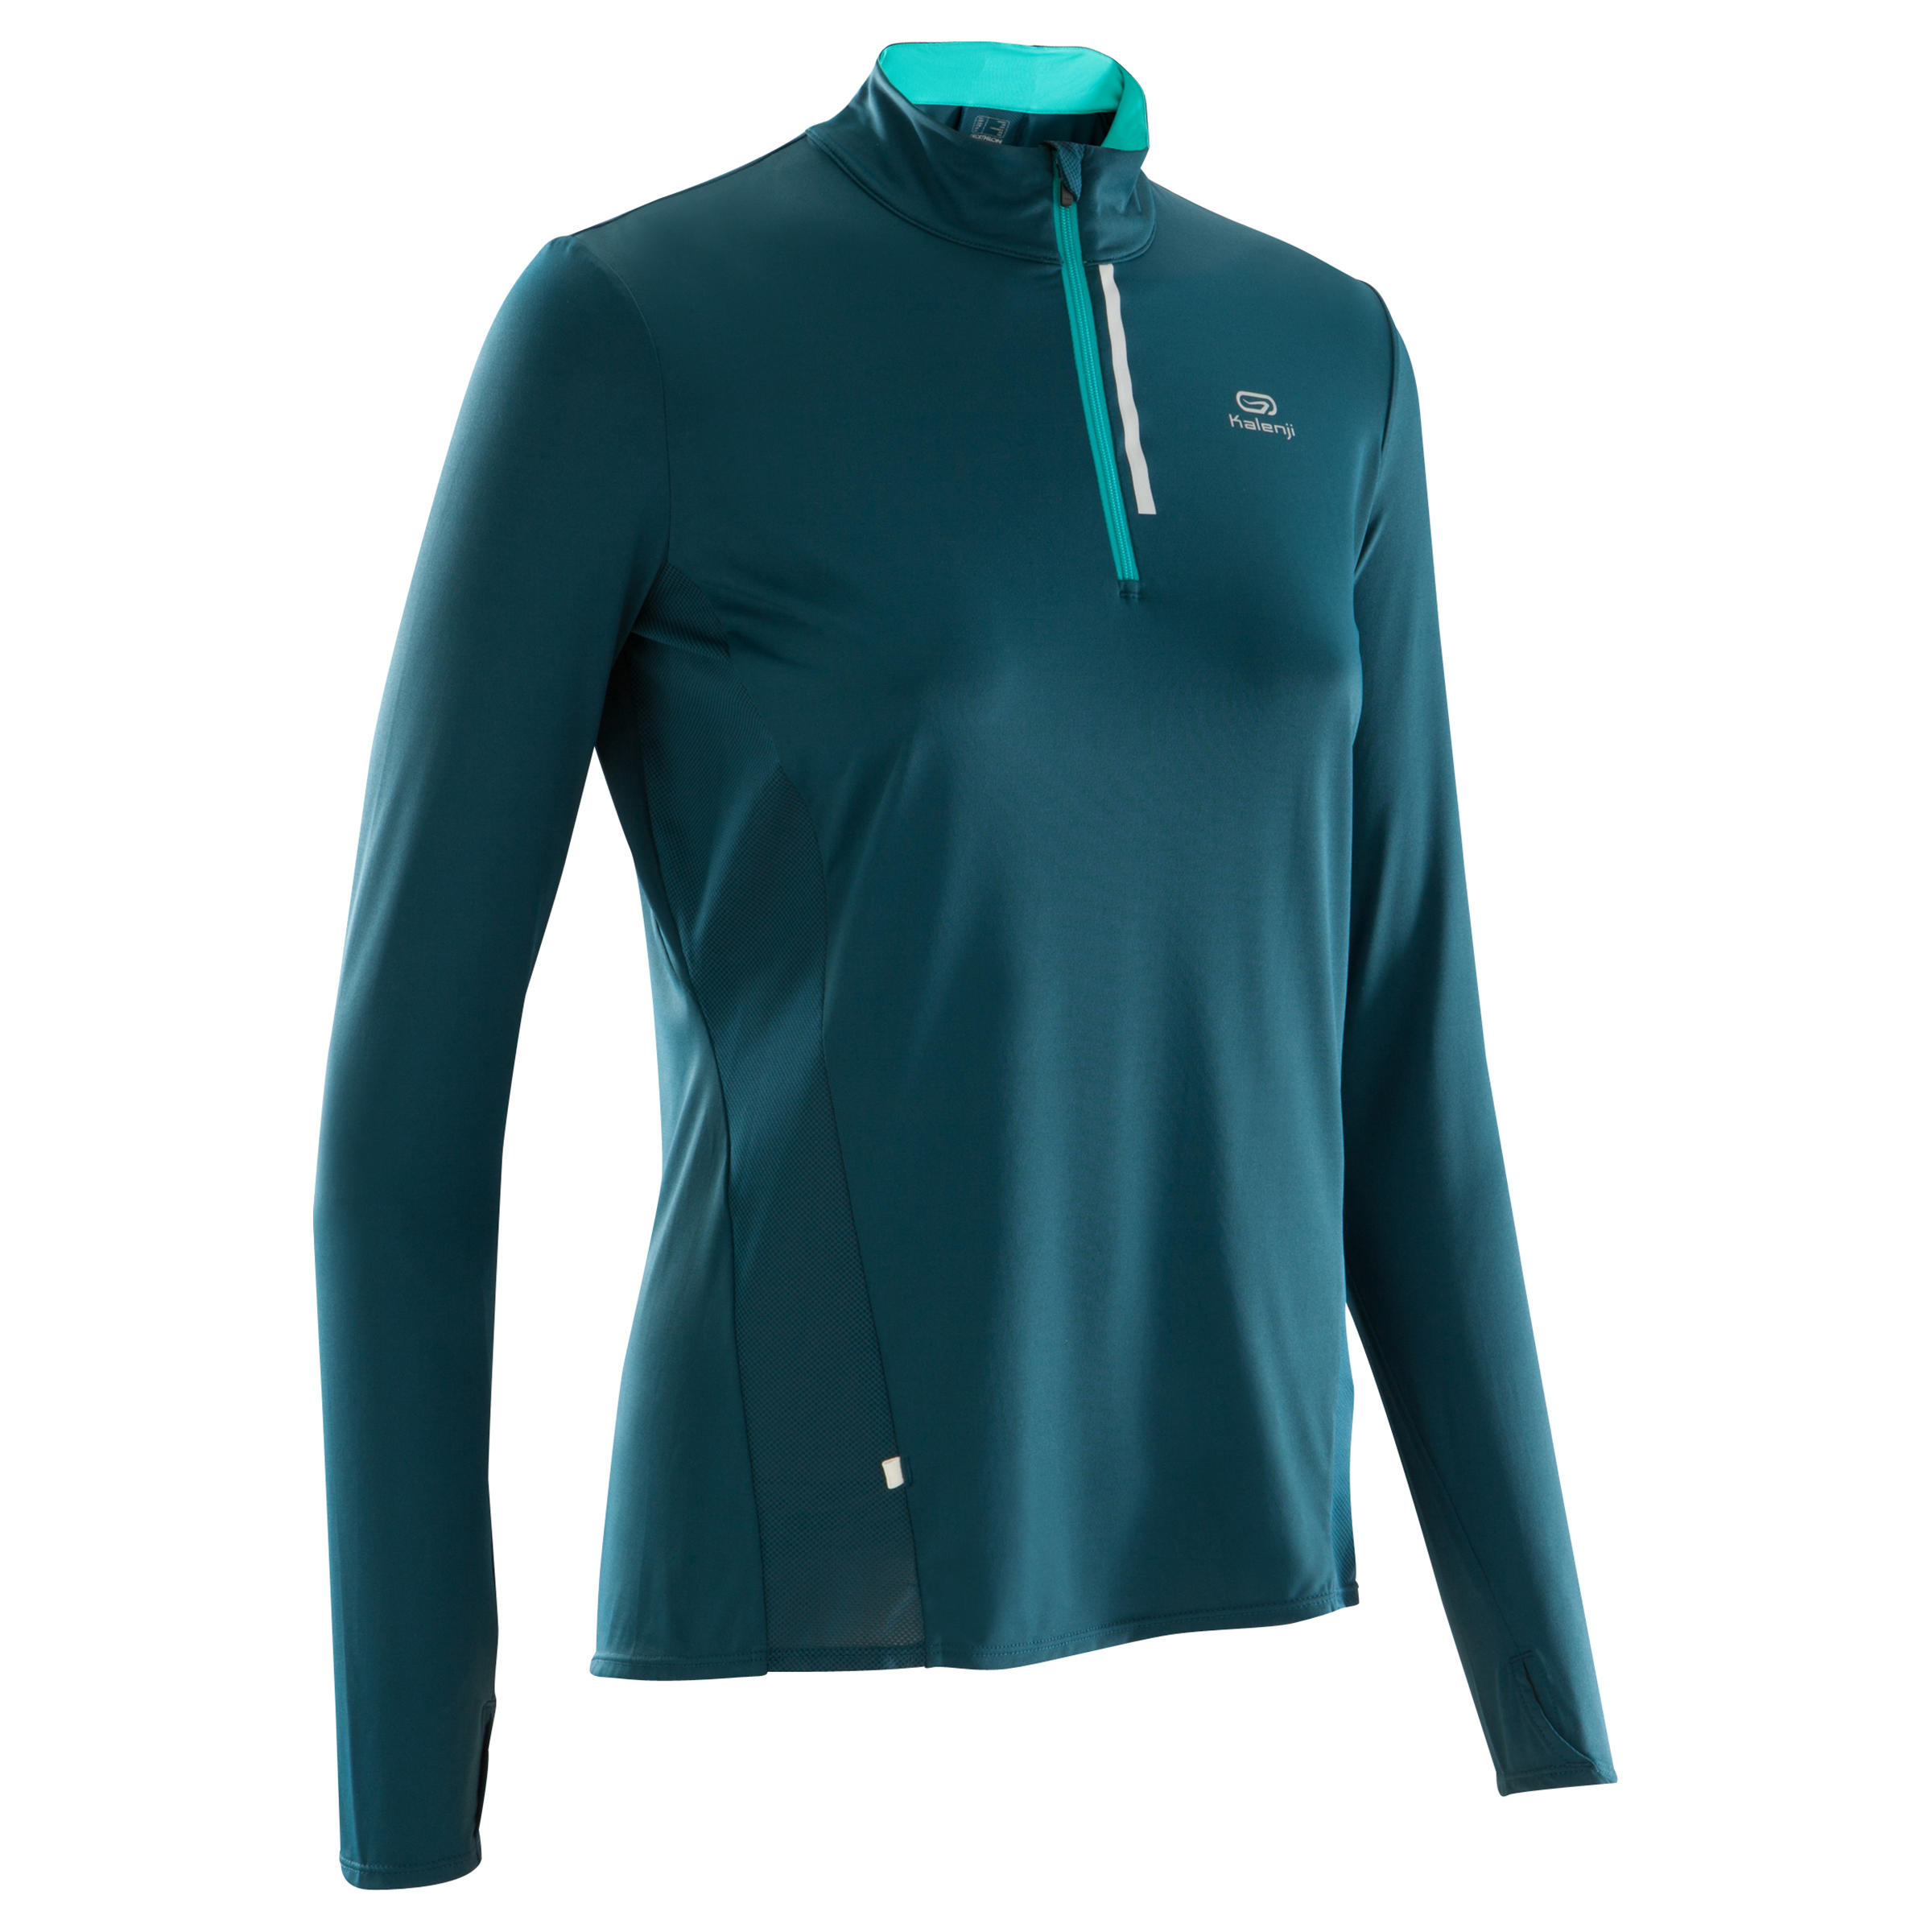 KALENJI Run Dry + Zip Women's Long-Sleeved Running Jersey - Dark Green